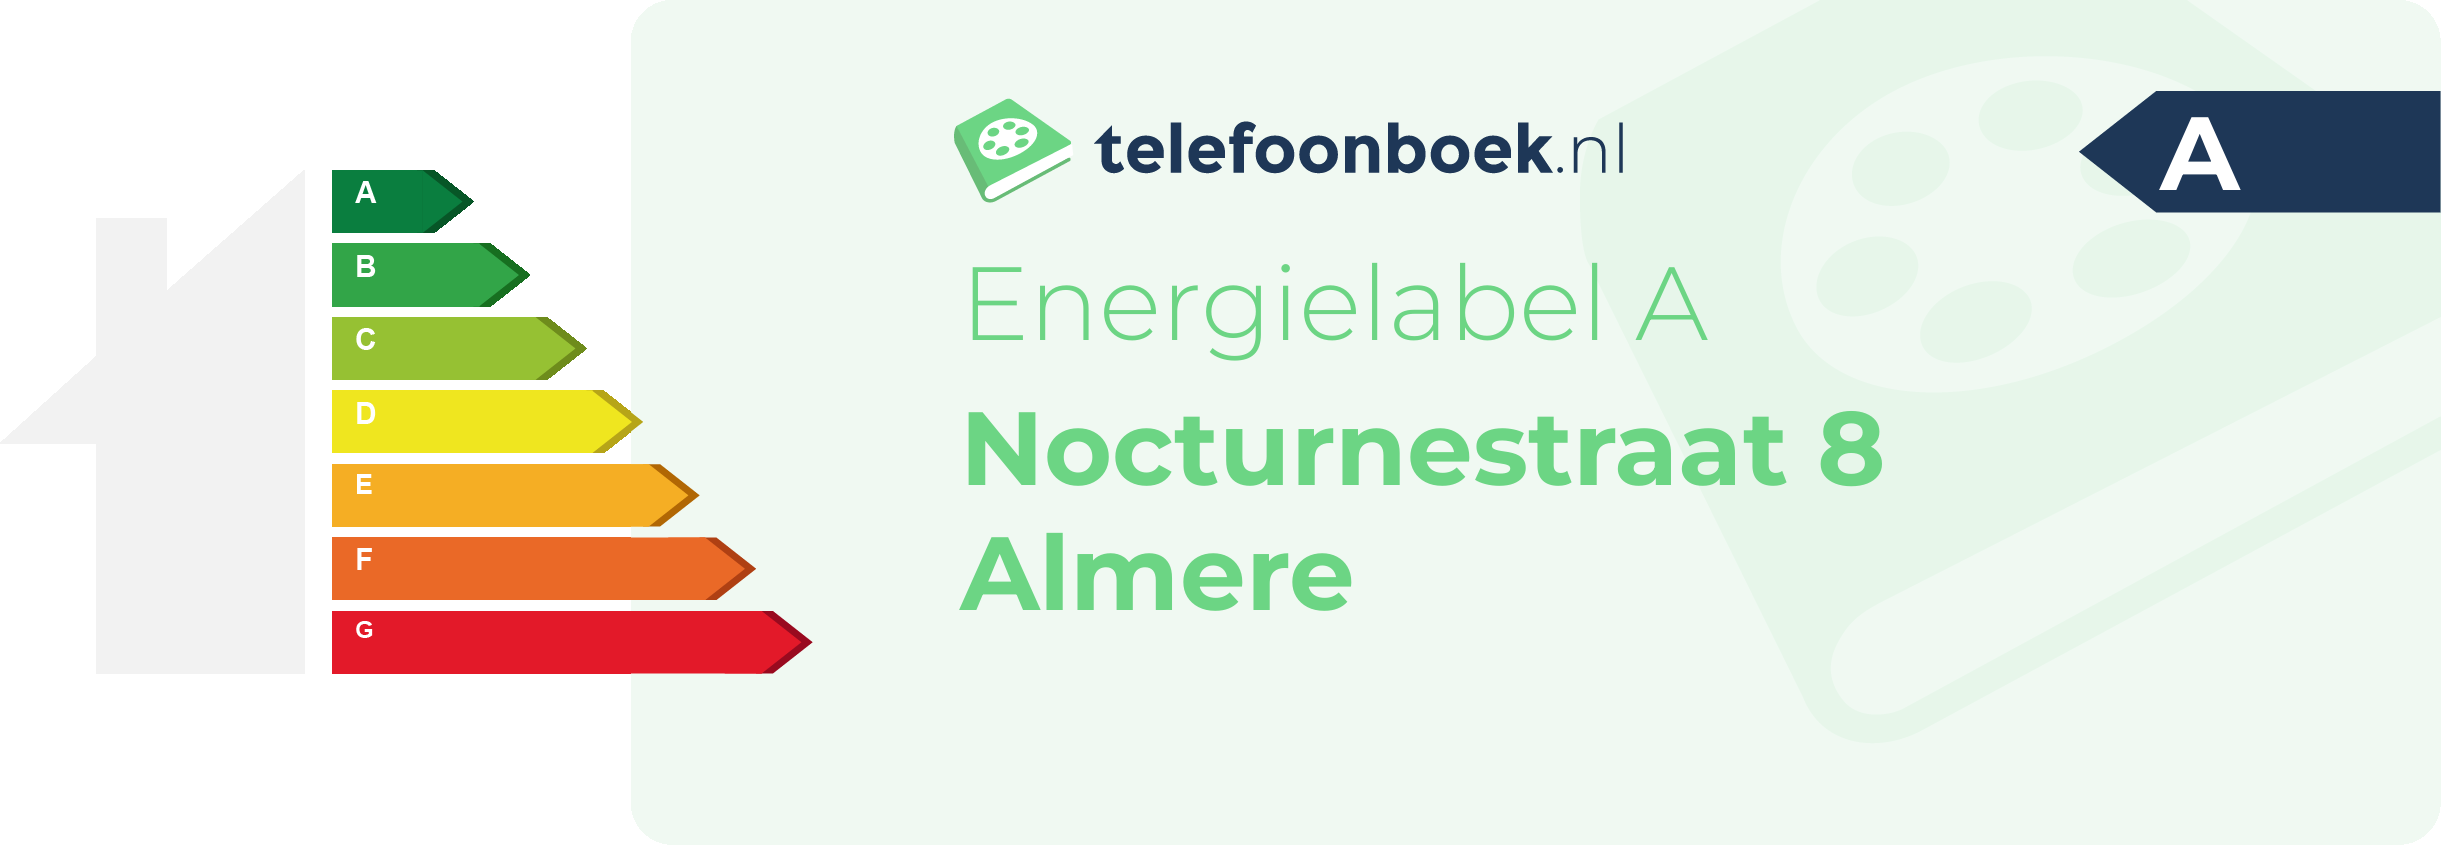 Energielabel Nocturnestraat 8 Almere